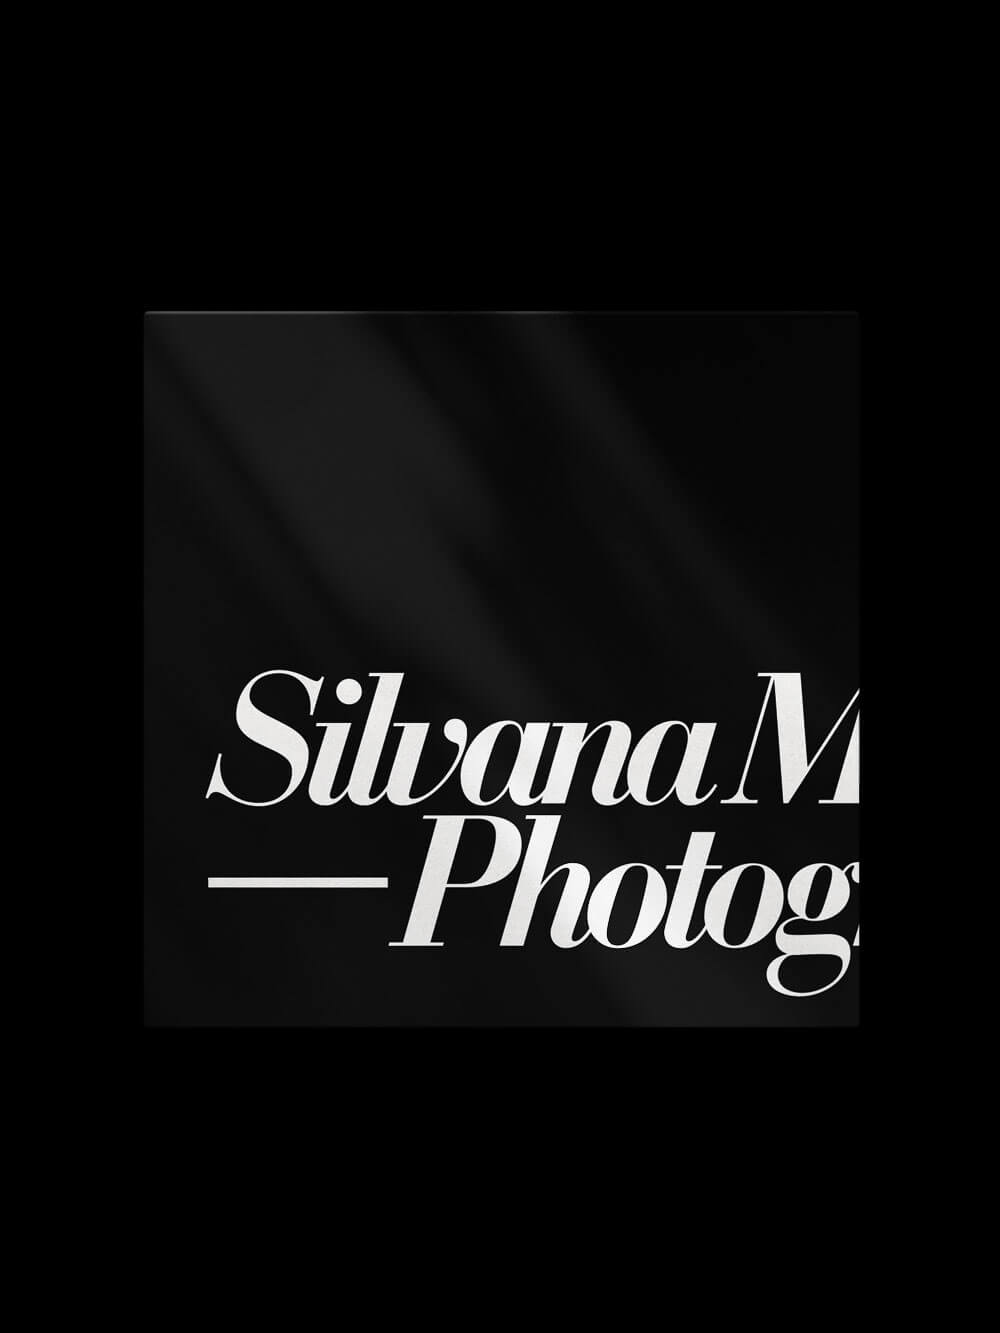 Silvana Metallo Photography